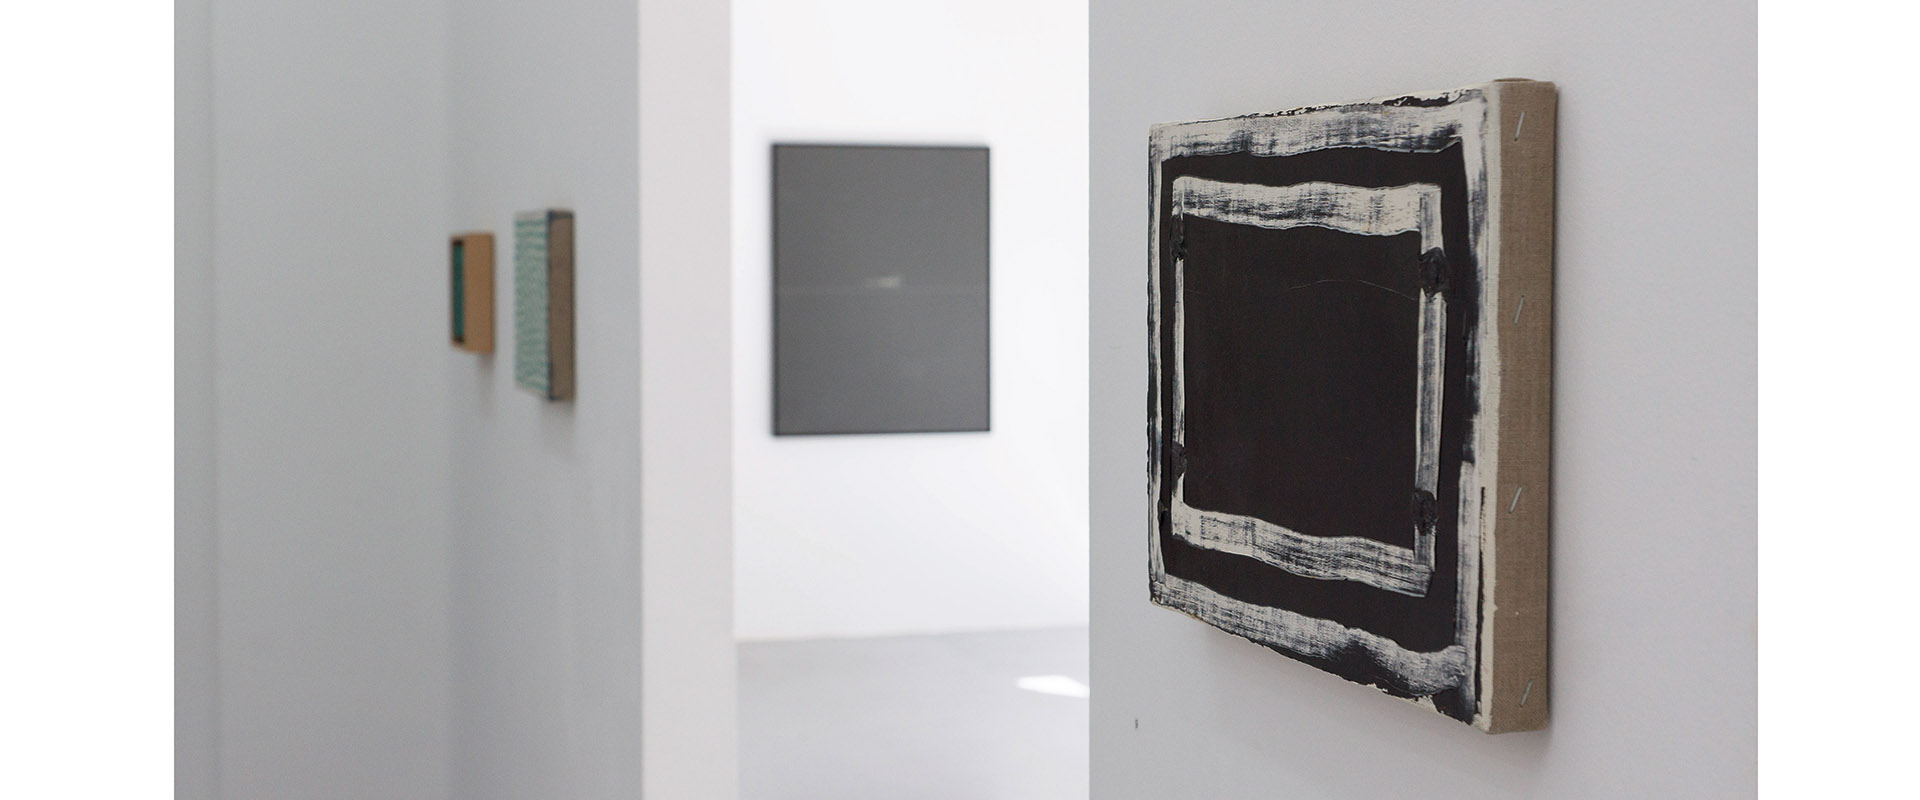 Ausstellungsansicht "Fundamental Painting. Joan Hernández Pijuan - Jerry Zeniuk", Galerie Renate Bender 2015